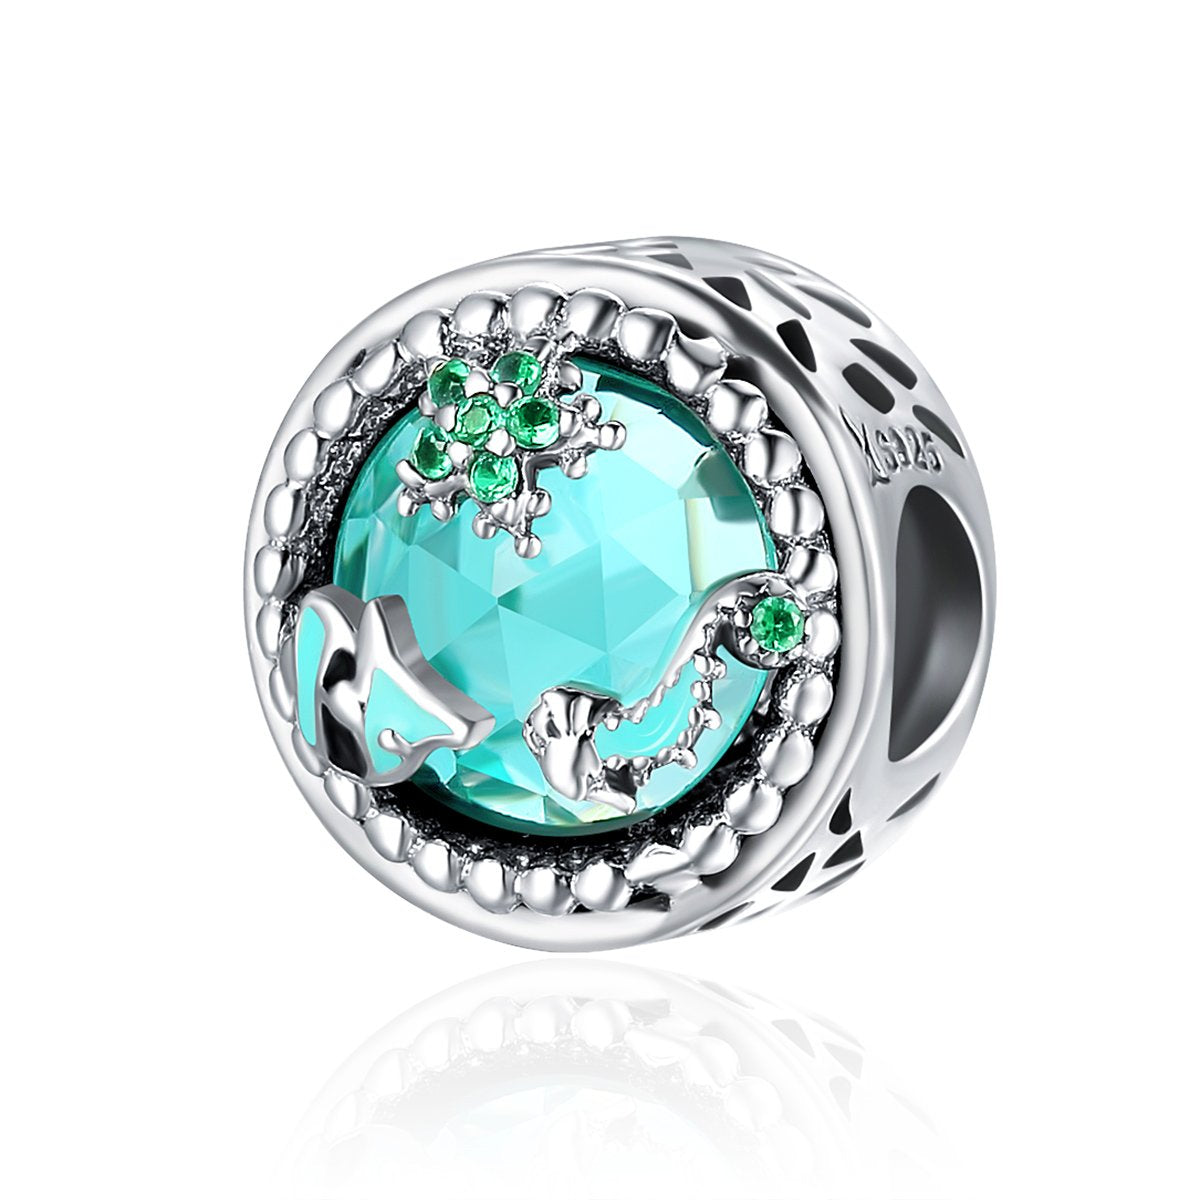 Sterling 925 silver charm the green echo bead pendant fits Pandora charm and European charm bracelet Xaxe.com